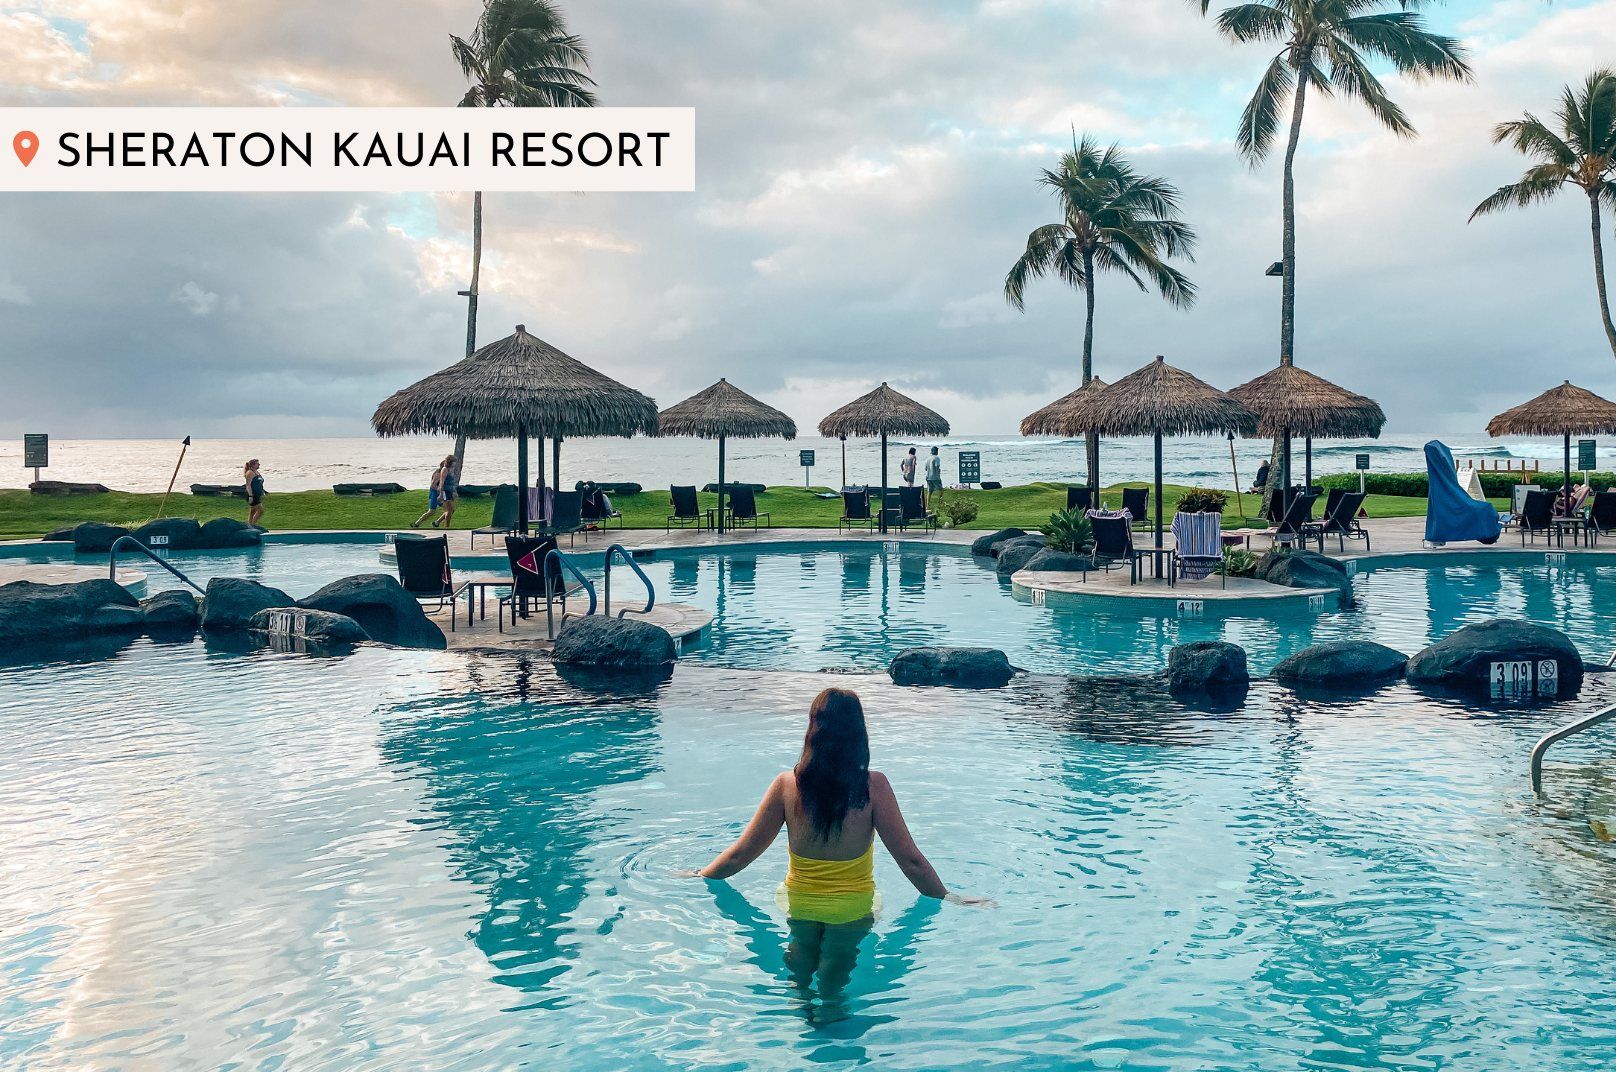 pictures of Kauai, Hawaii to inspire your next island getaway